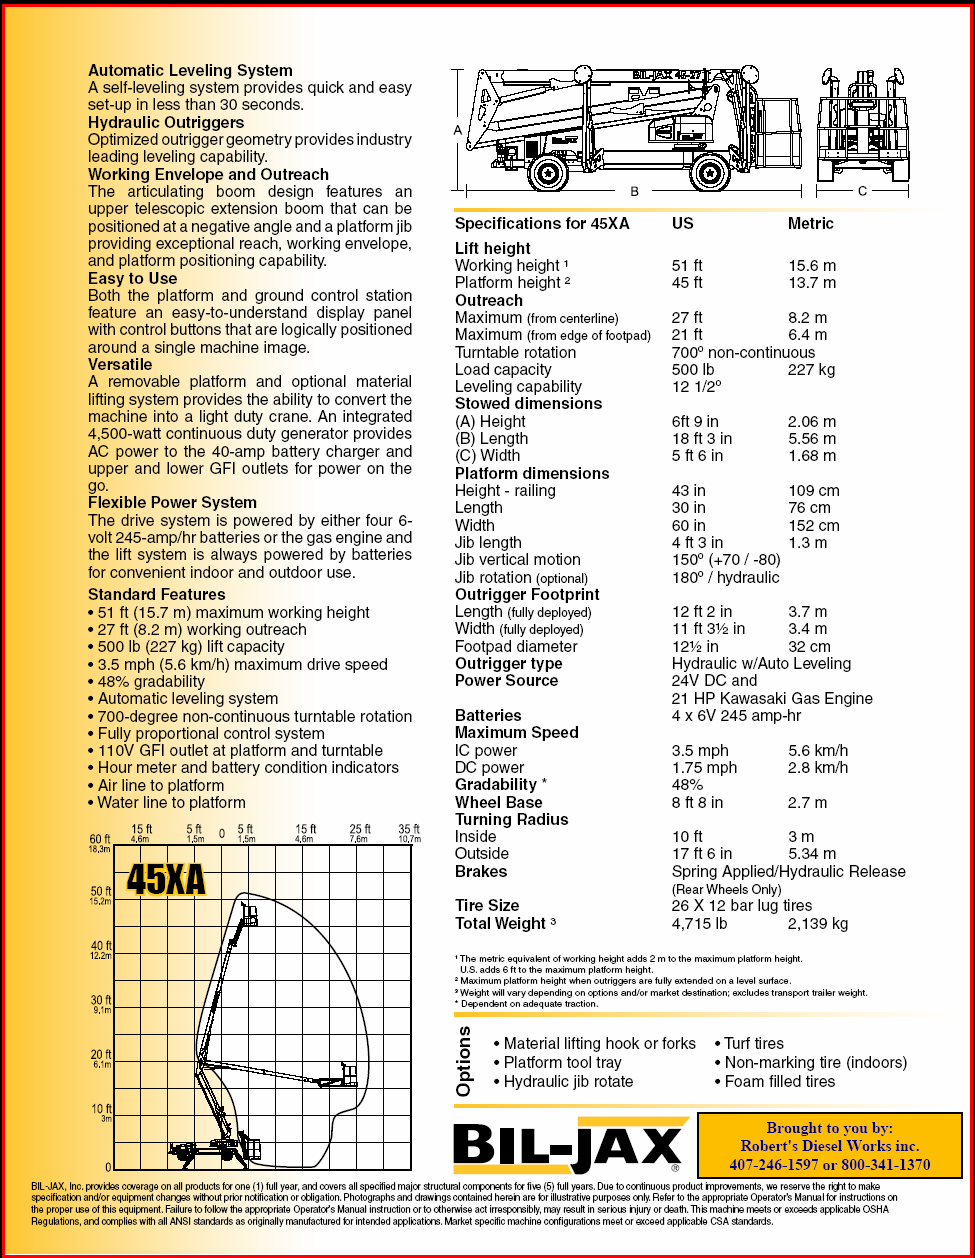 45XA Bil-Jax Aerial work platform information and lift chart.